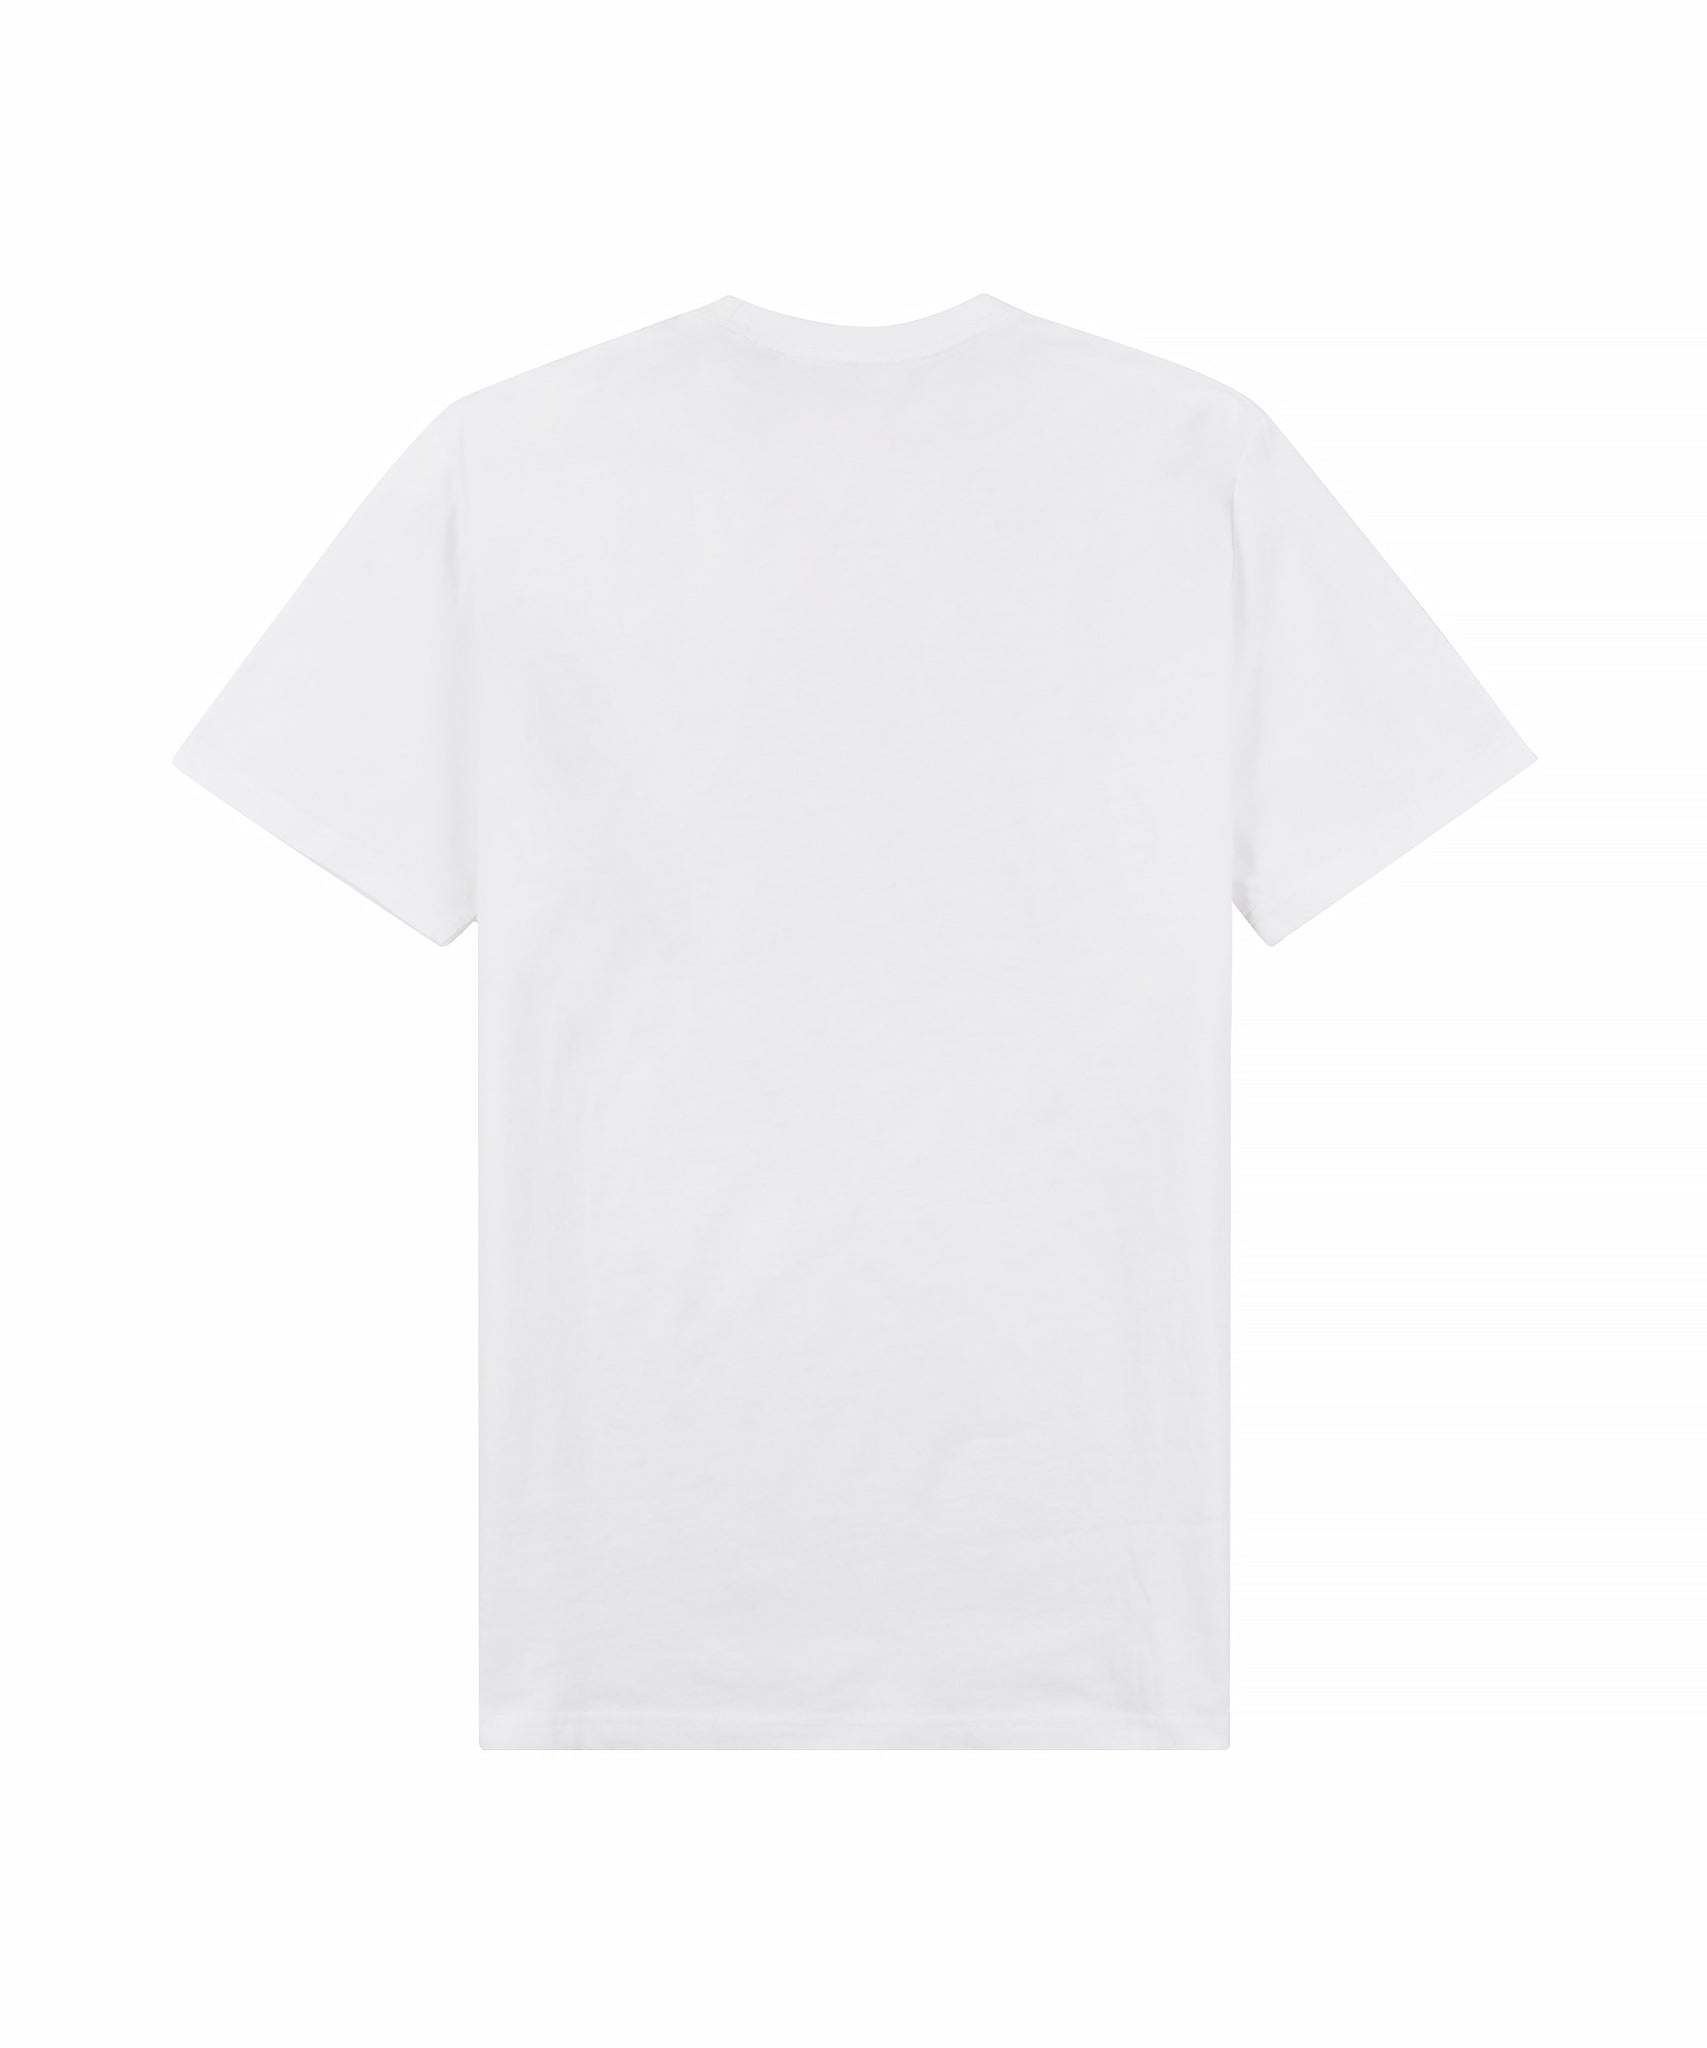 Saucey 'Drippy S' White T-Shirt